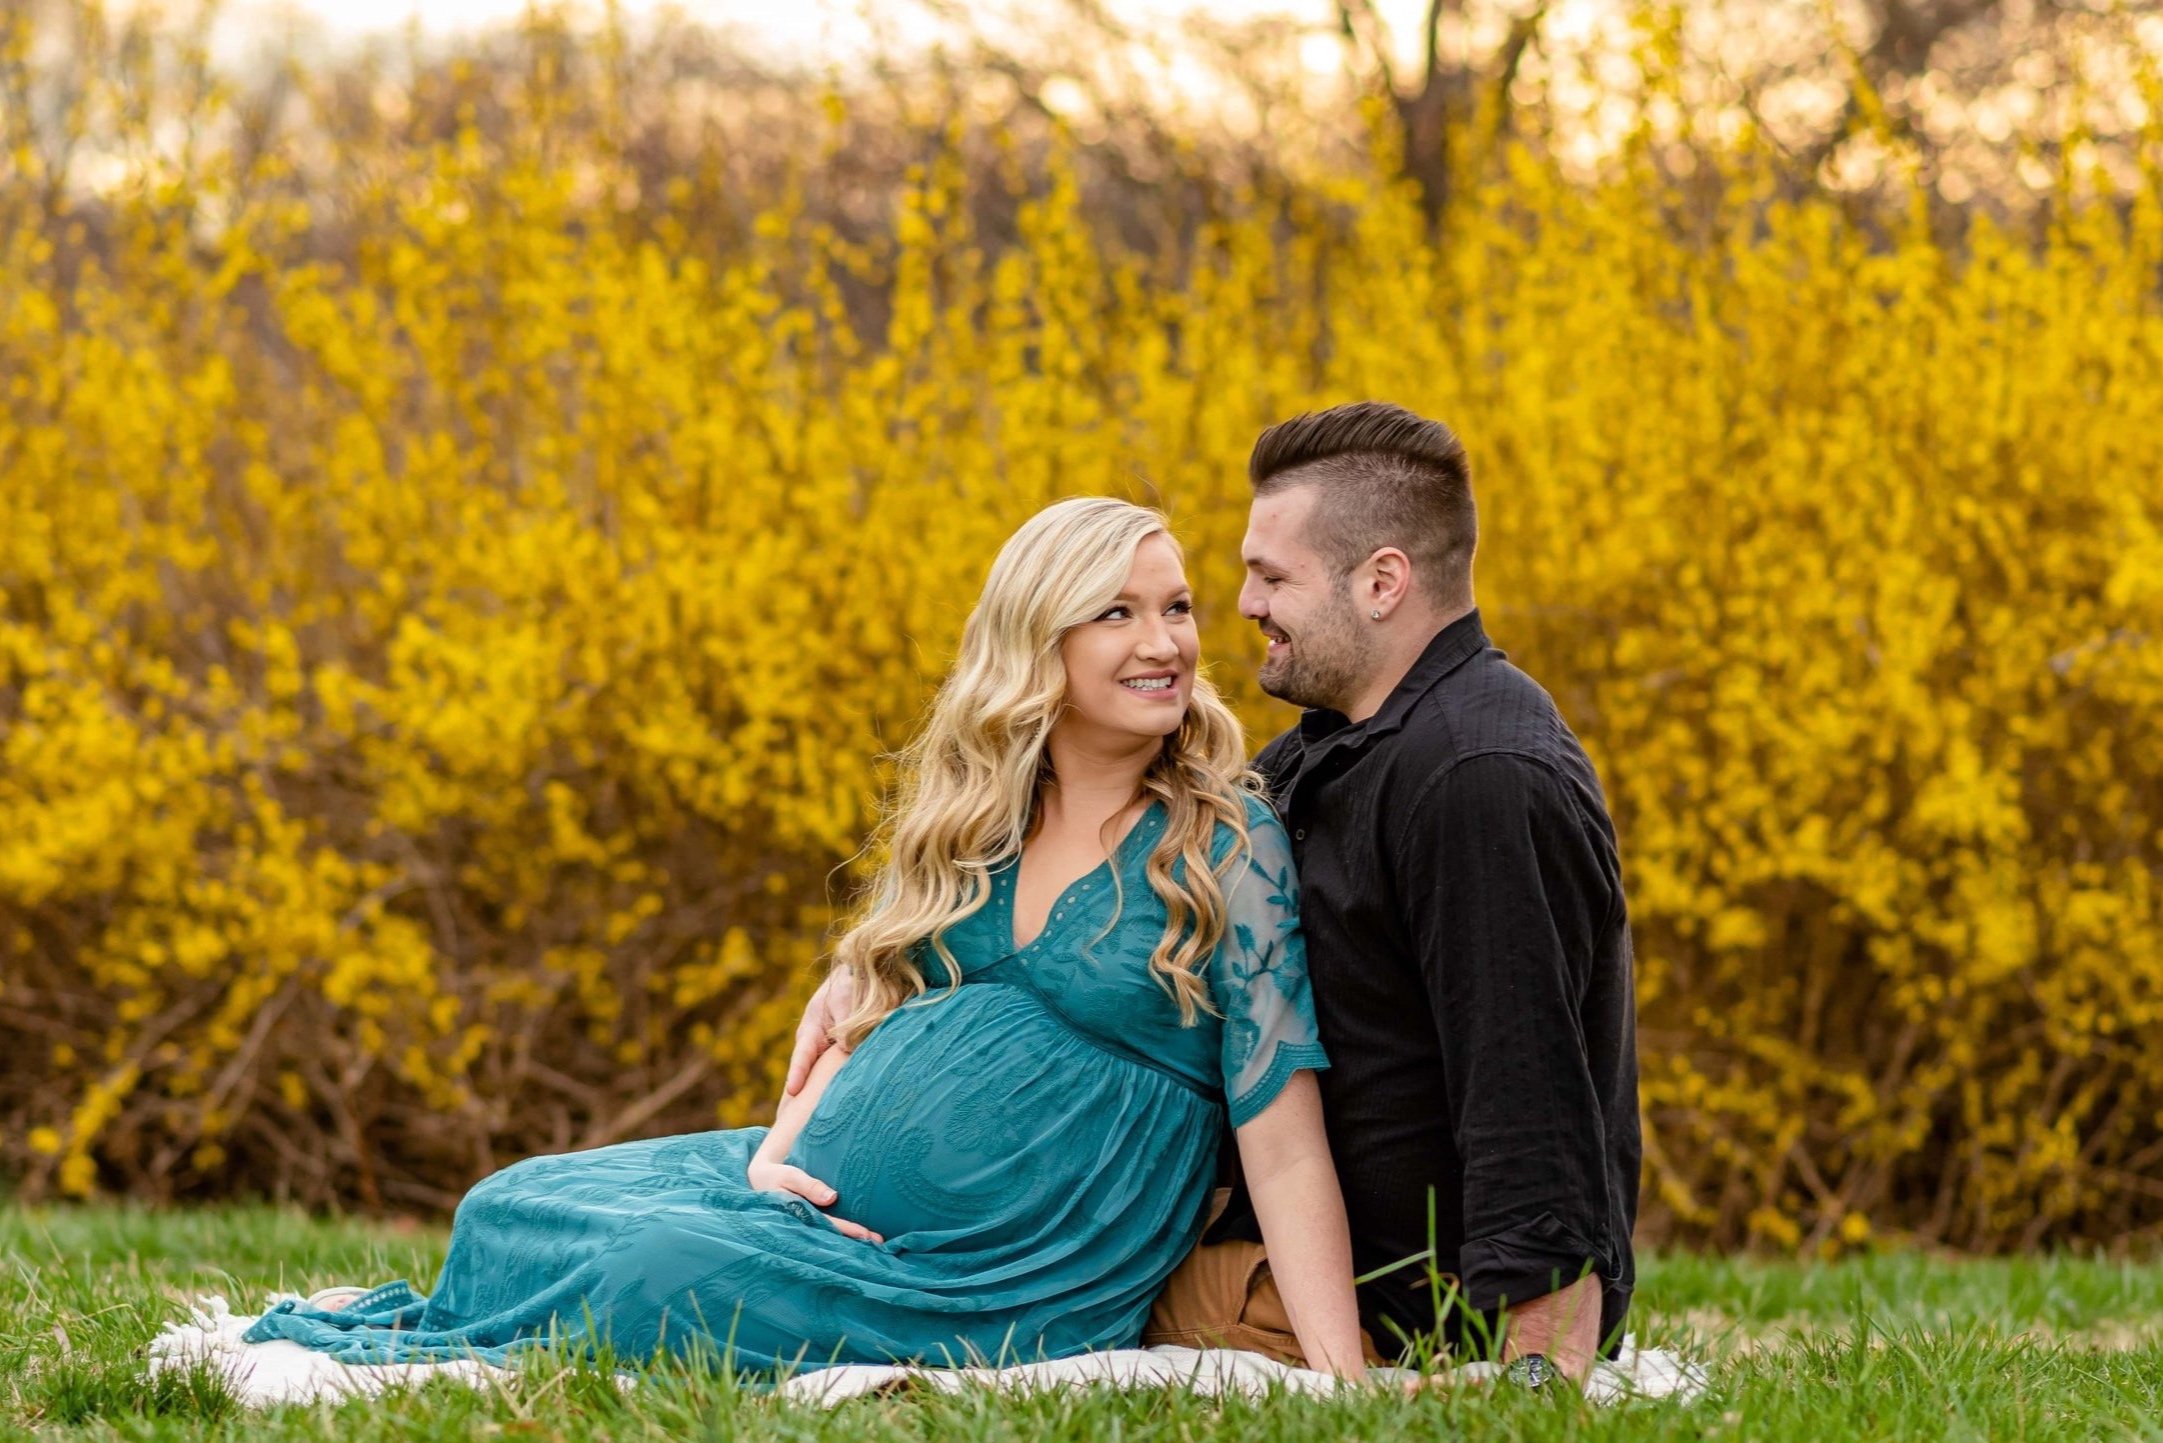 Maryland Maternity Photoshoot with expecting couple sitting on a blanket